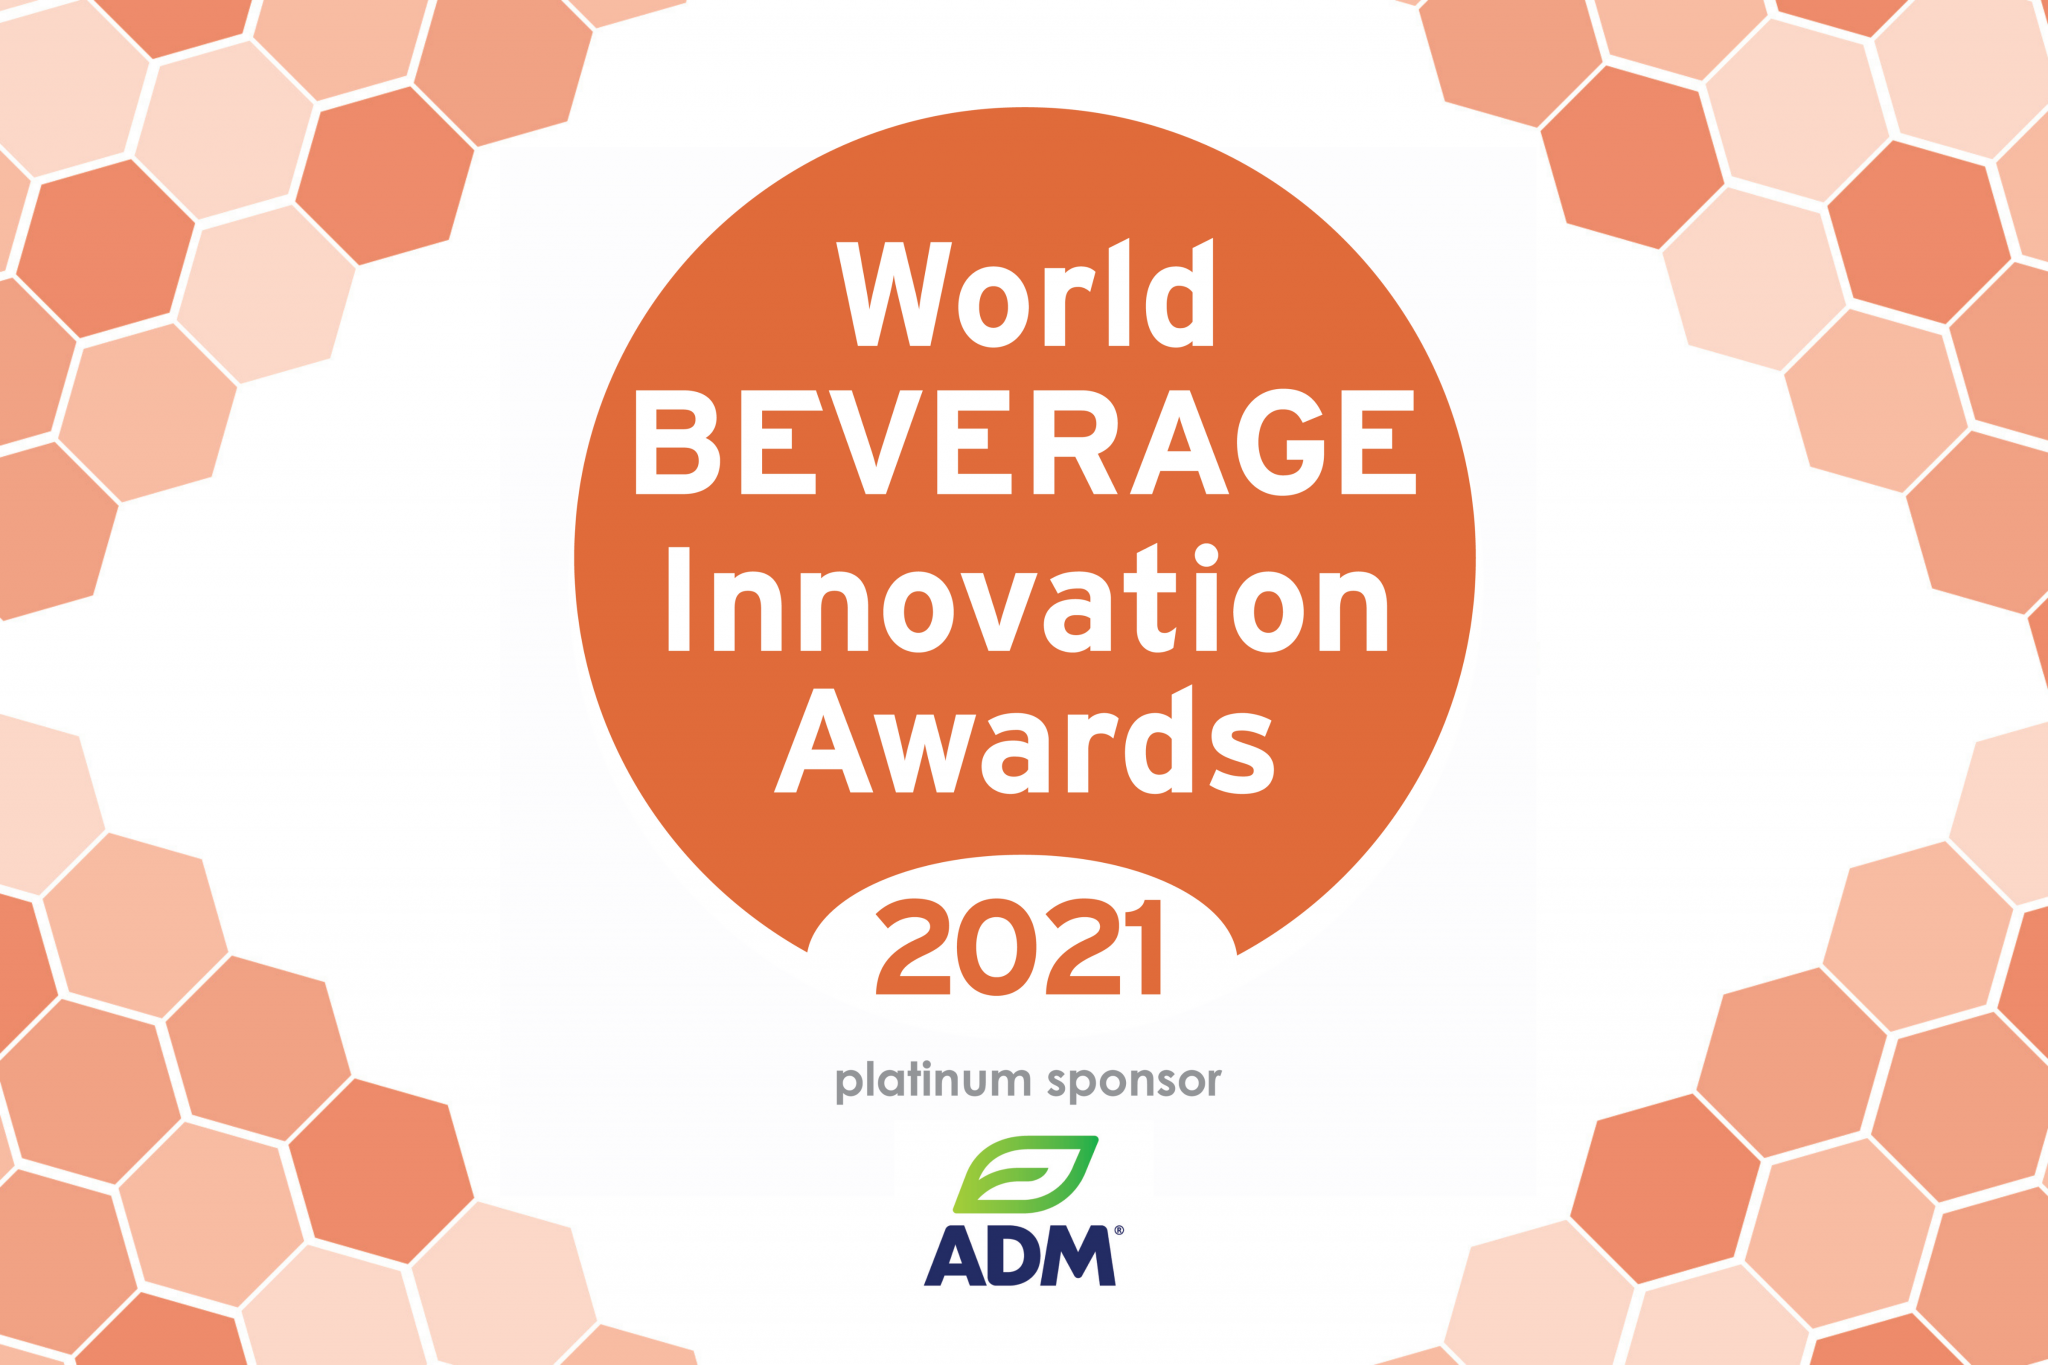 World Beverage Innovation Awards 2021: Winners Revealed!